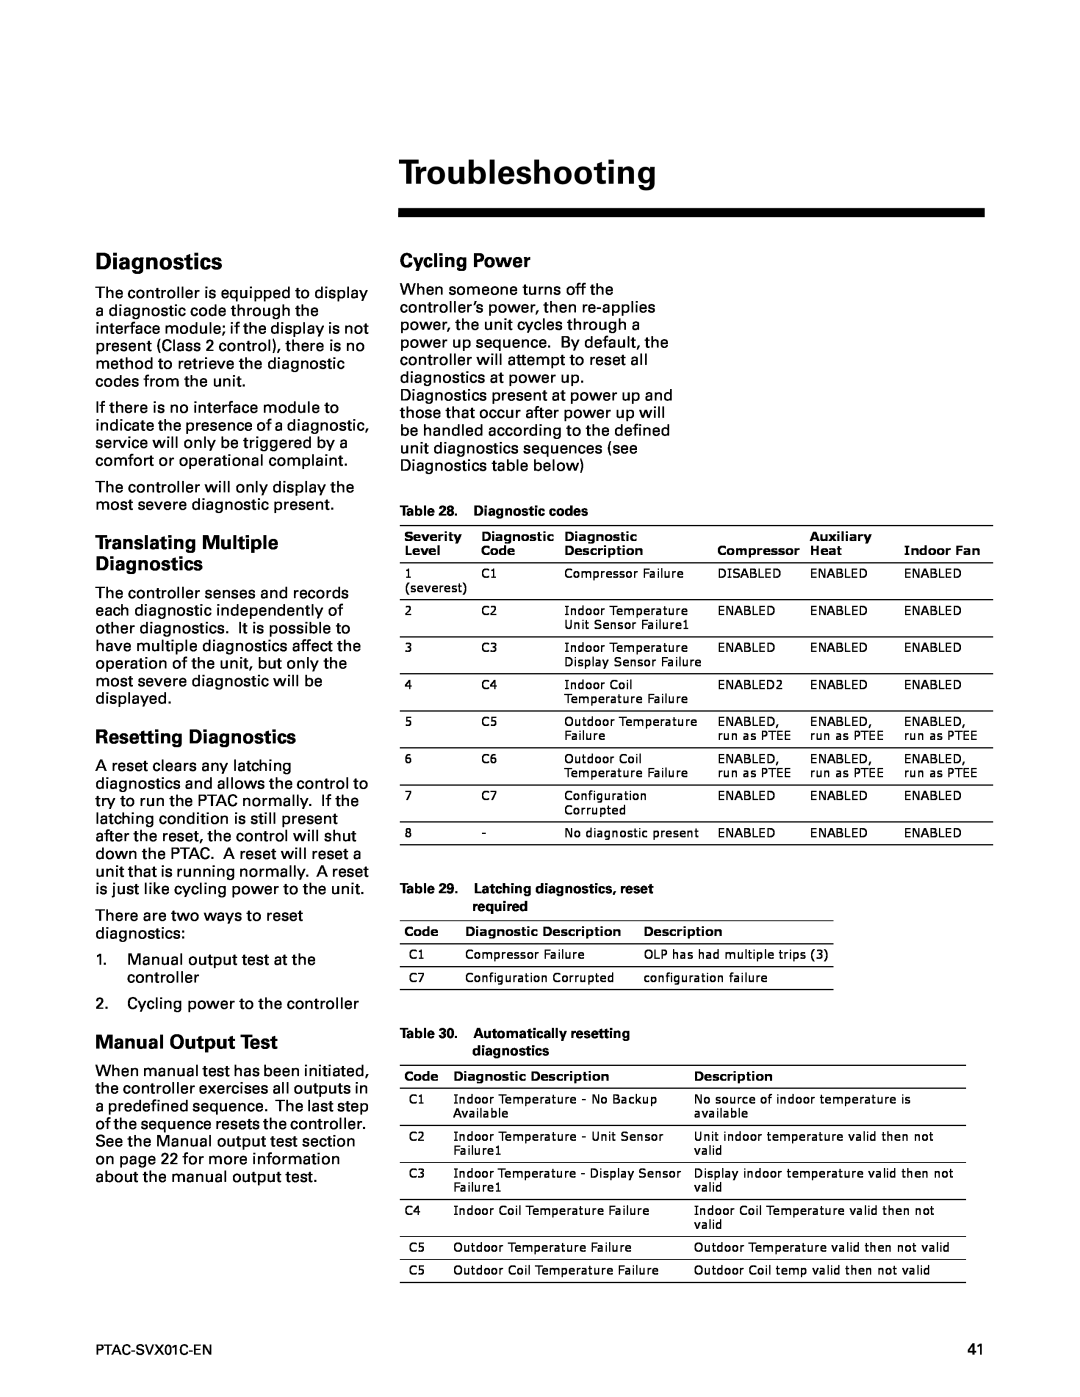 Trane PTAC-SVX01C-EN Troubleshooting, Translating Multiple Diagnostics, Resetting Diagnostics, Manual Output Test 